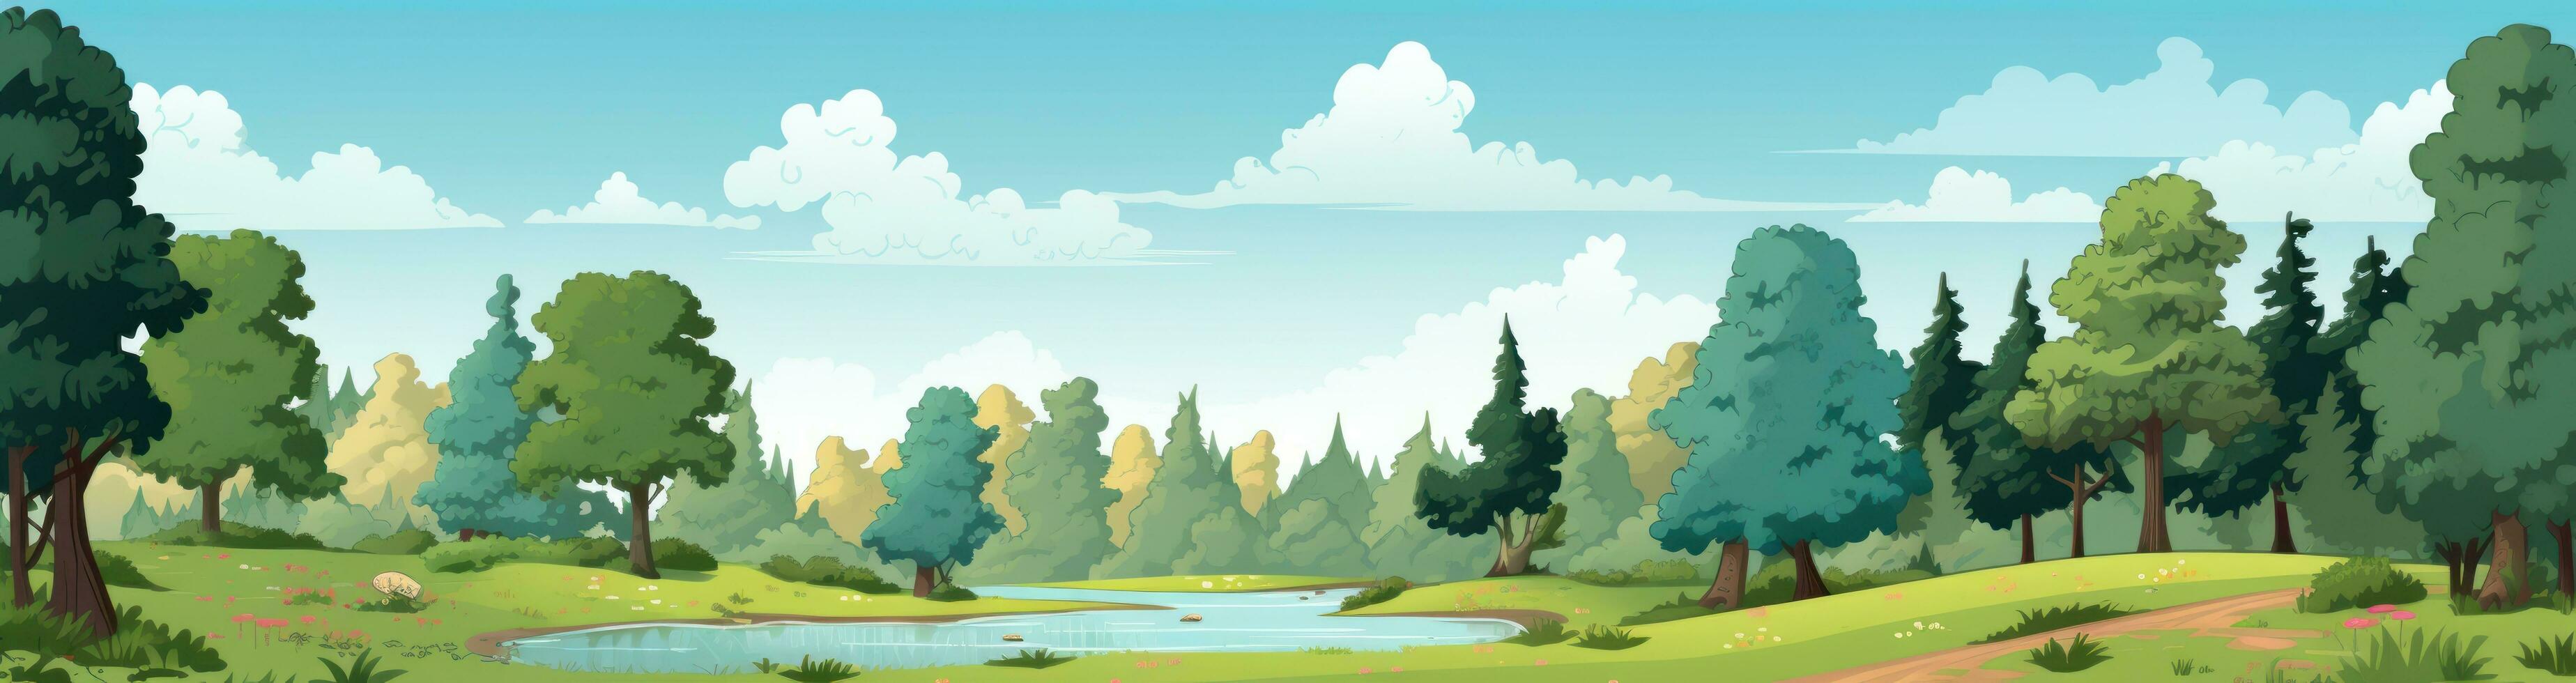 Cartoon forest illustration photo